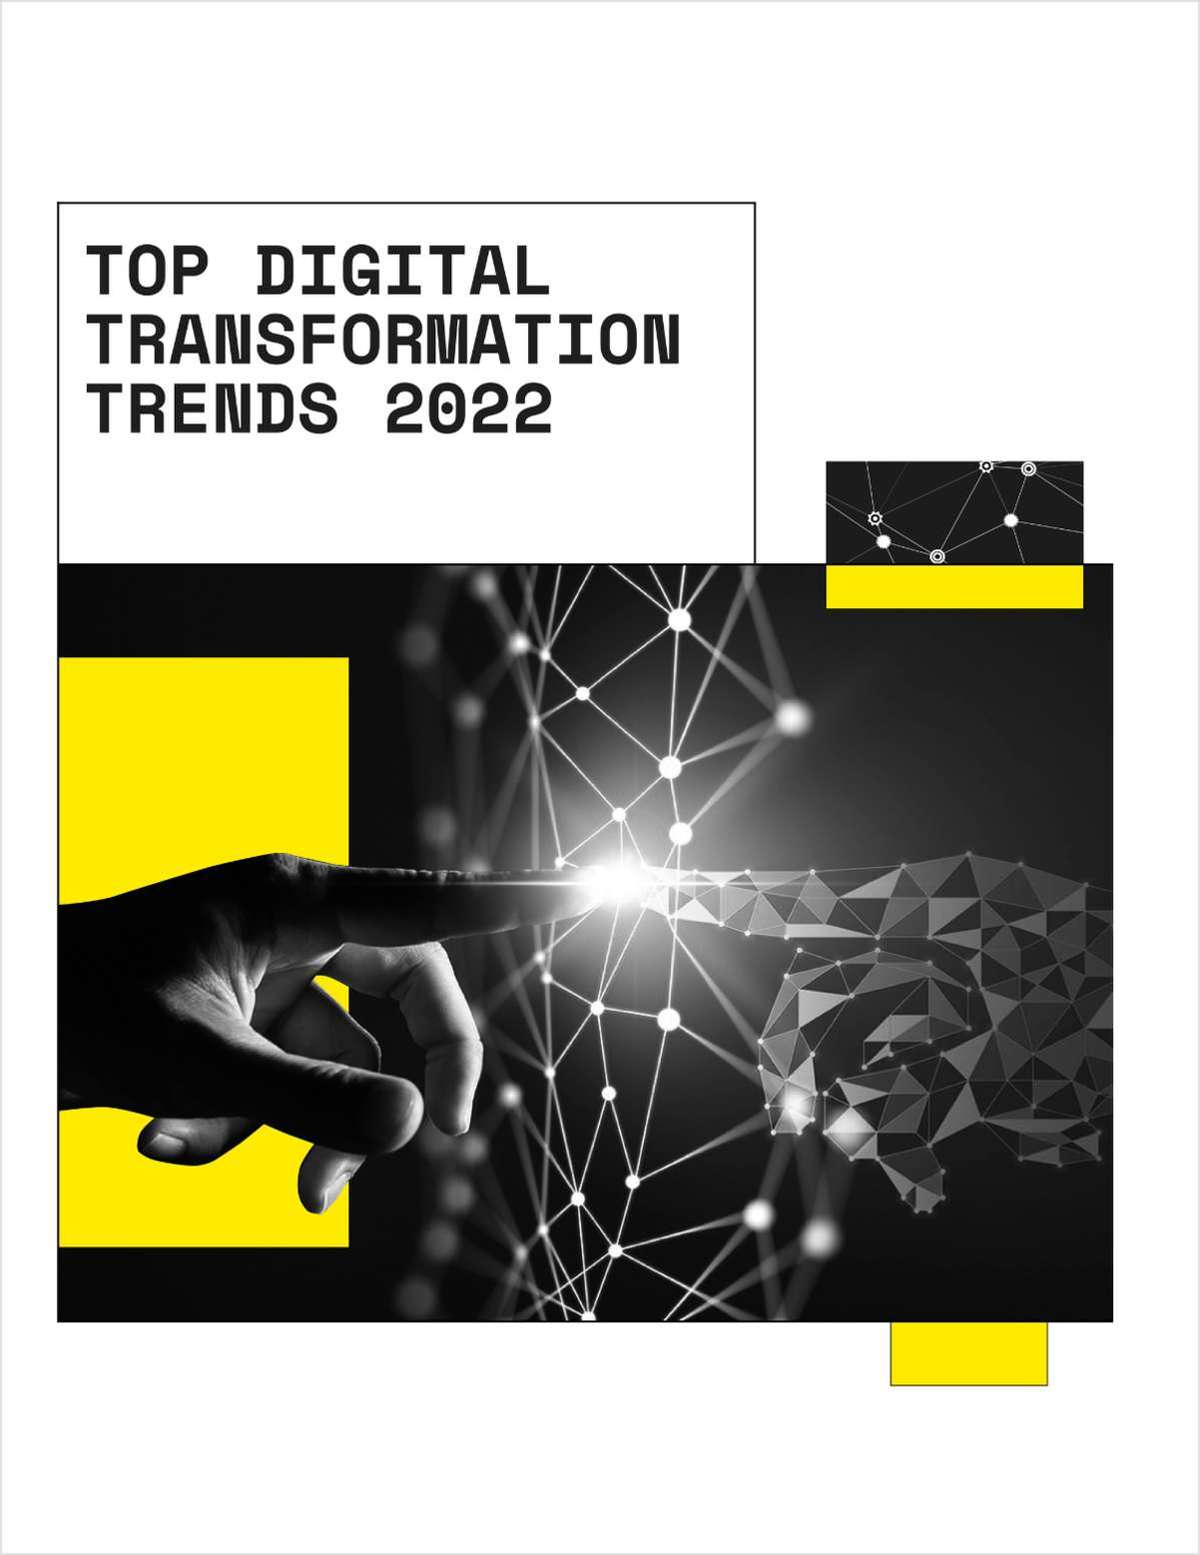 Top Digital Transformation Trends 2022